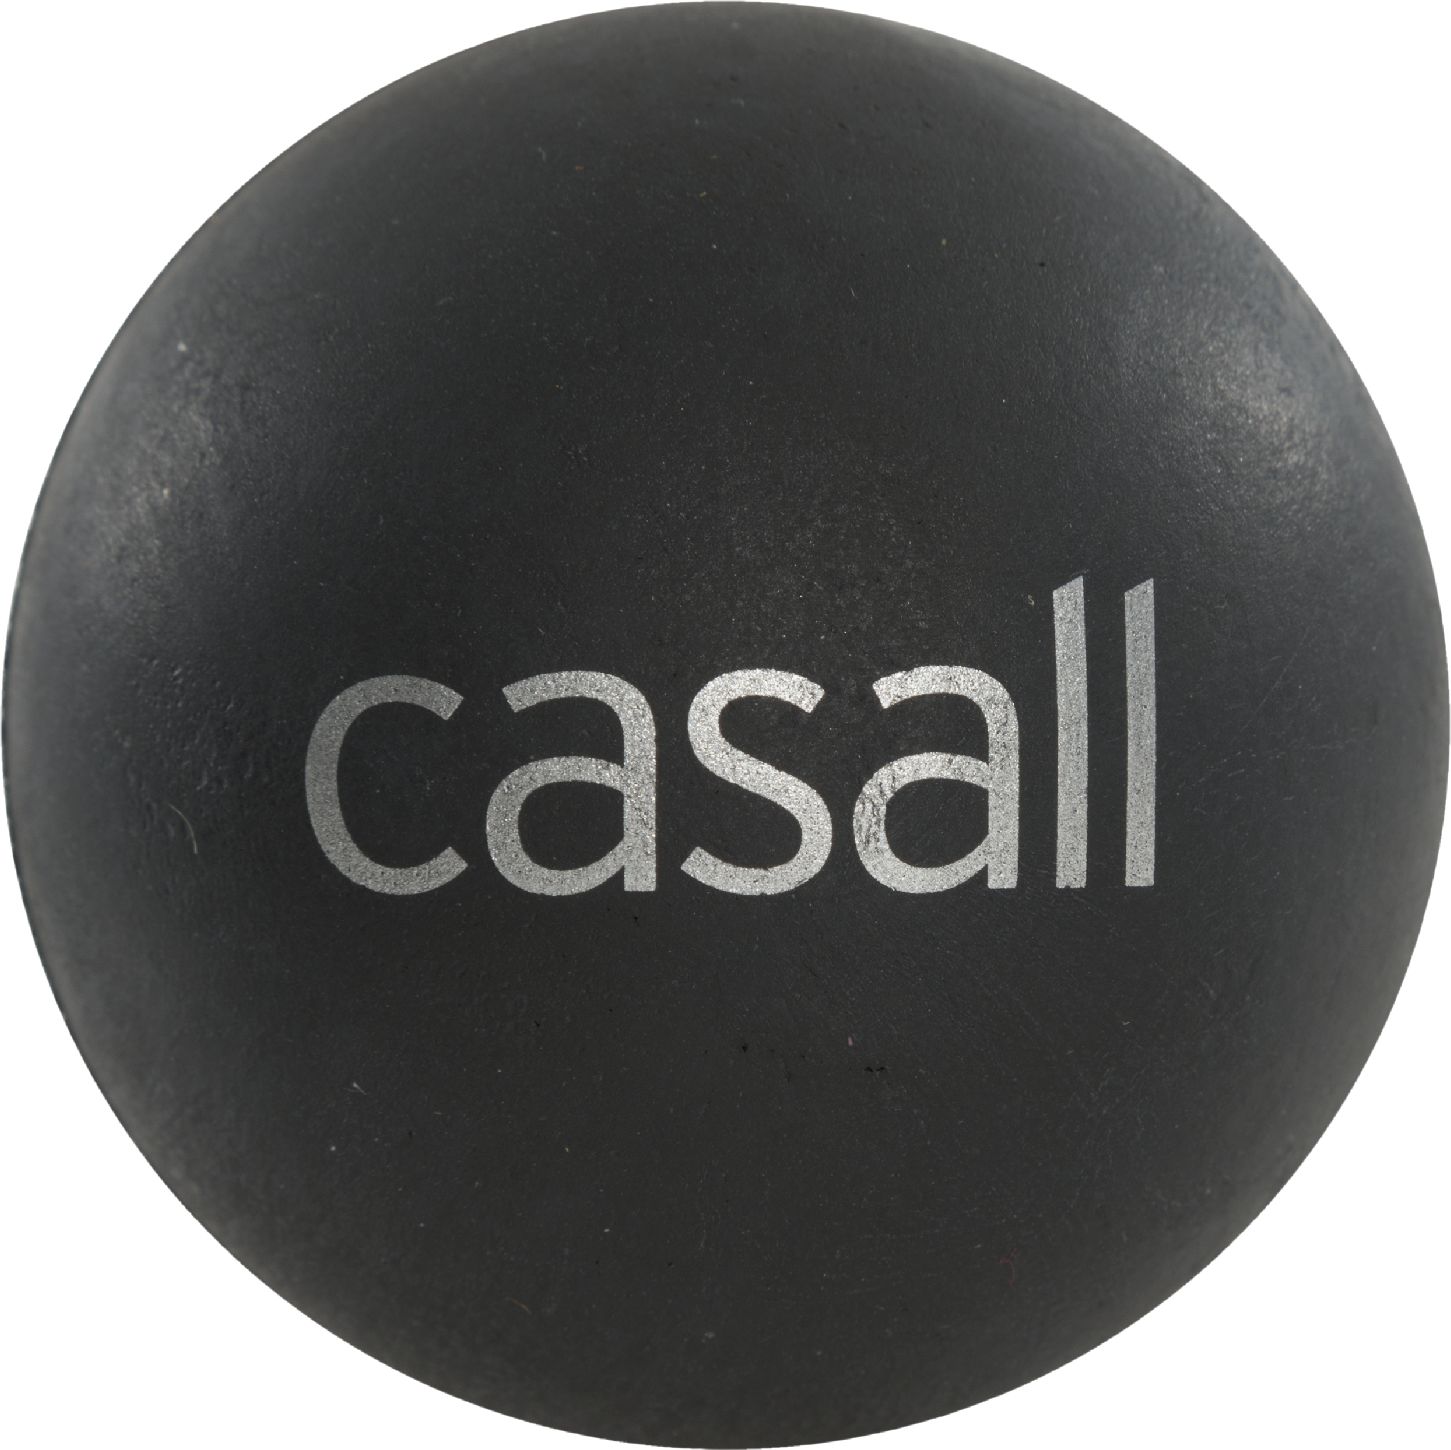 CASALL, PRESSURE POINT BALL